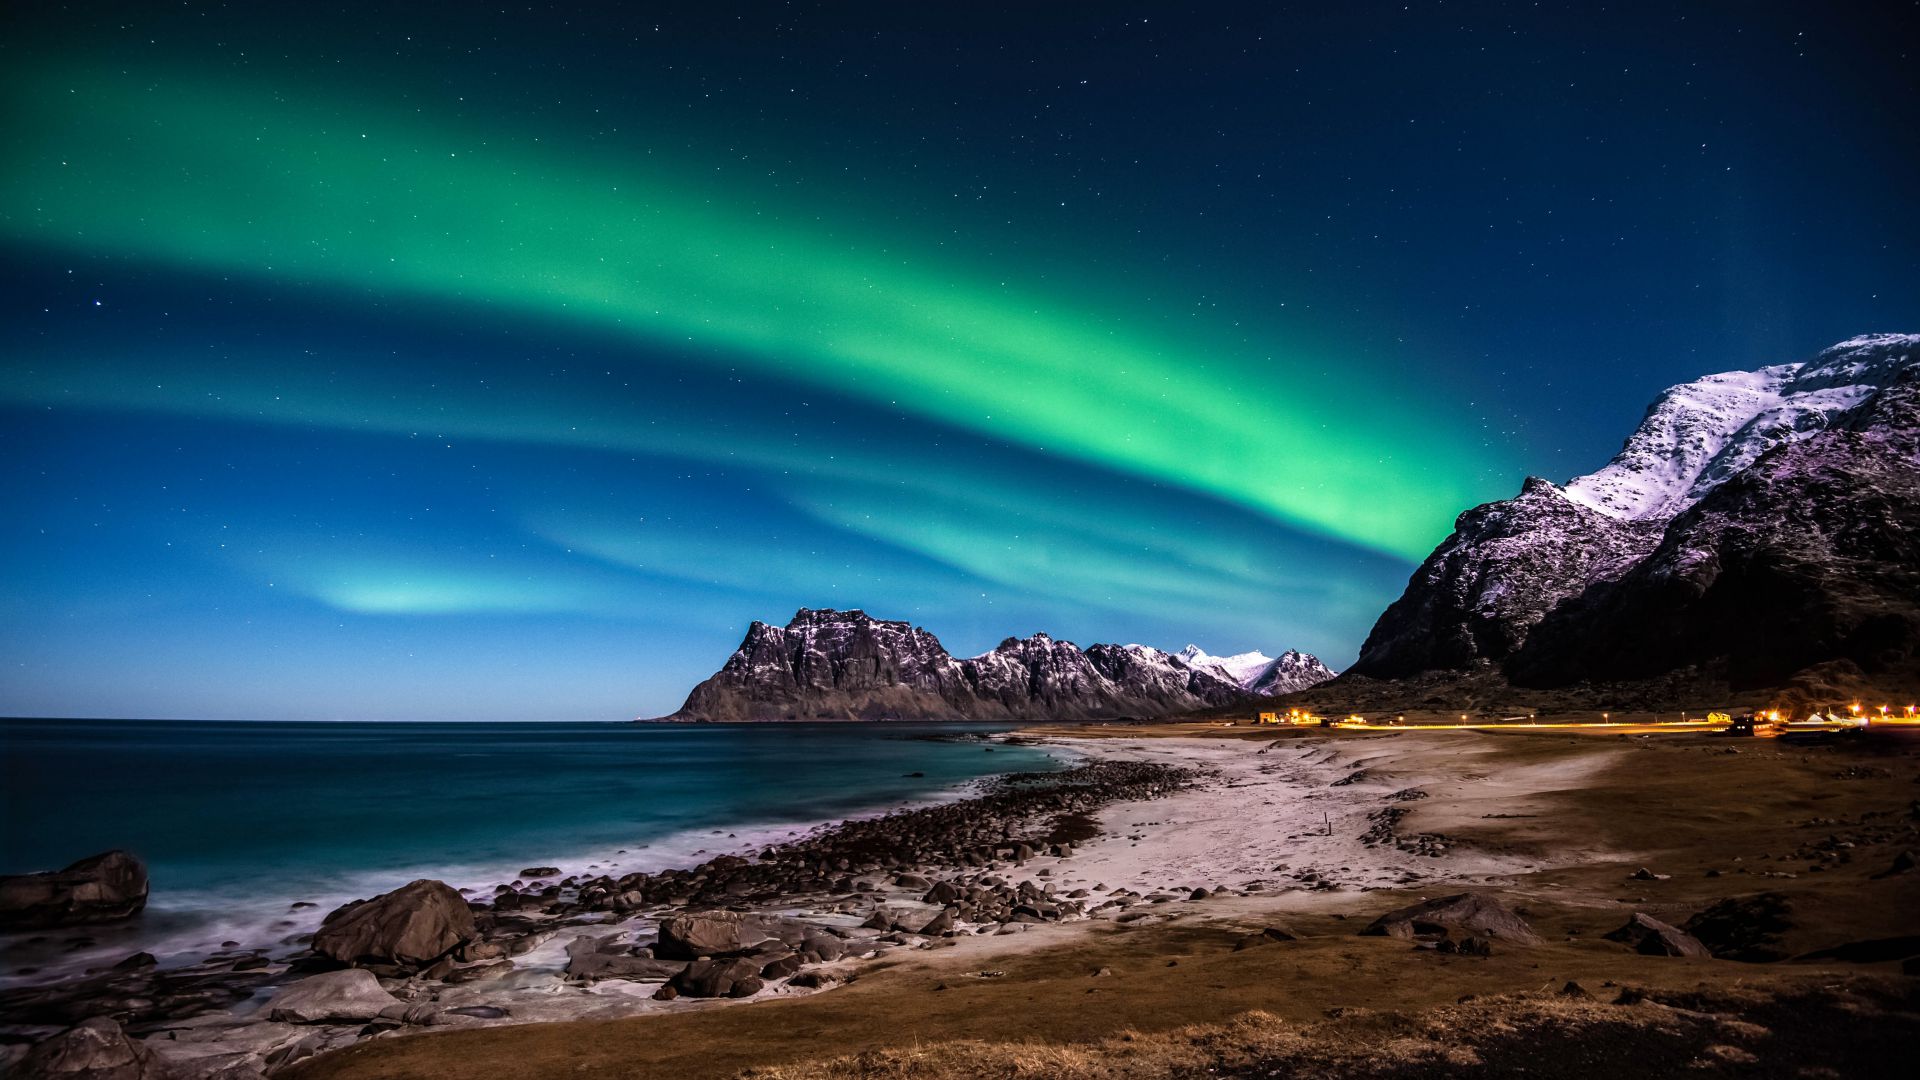 Norway, 5k, 4k wallpaper, HD, Lofoten islands, Mountains, sea, shore, night, northern lights, stars (horizontal)